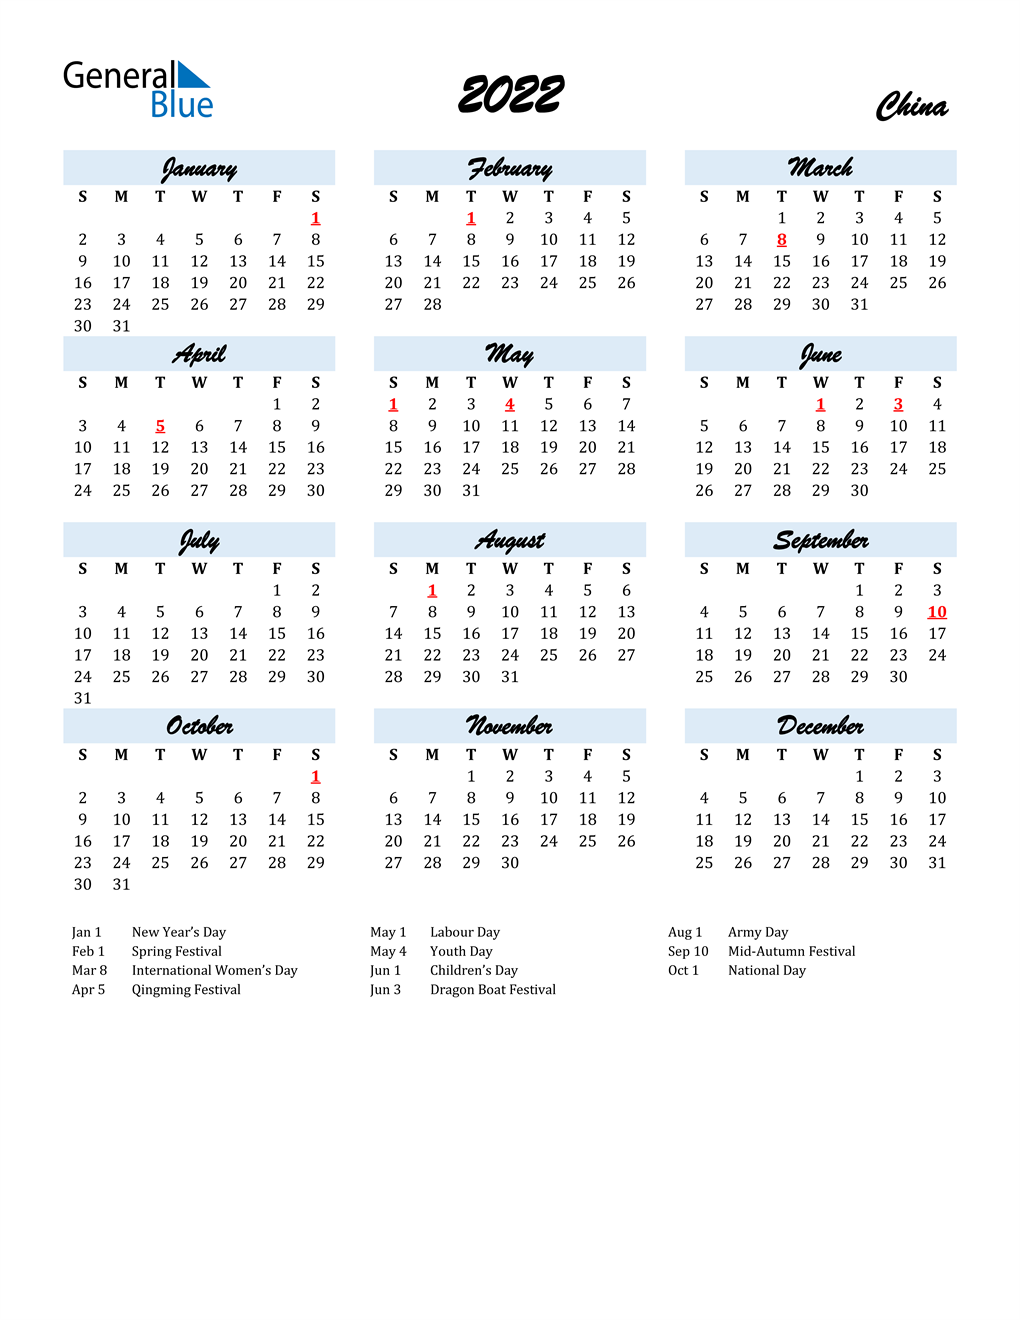 Chinese Calendar 2022 Pdf 2022 China Calendar With Holidays